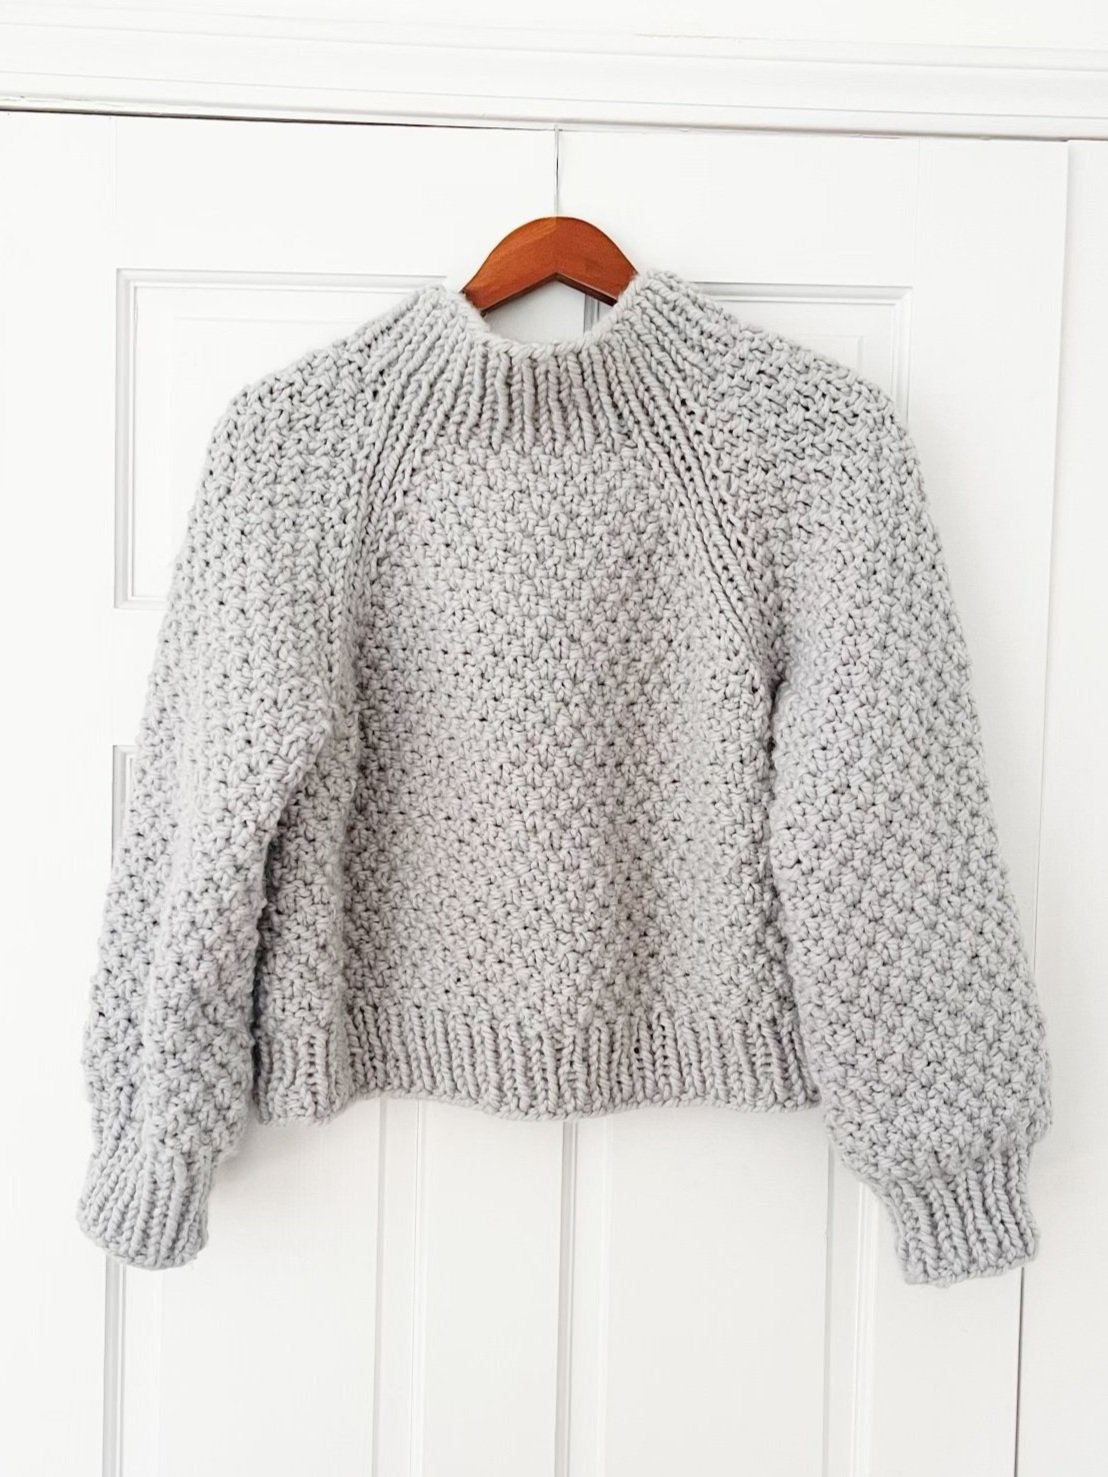 Easy Moss Stitch Raglan Knit Sweater Free Pattern + Tutorial